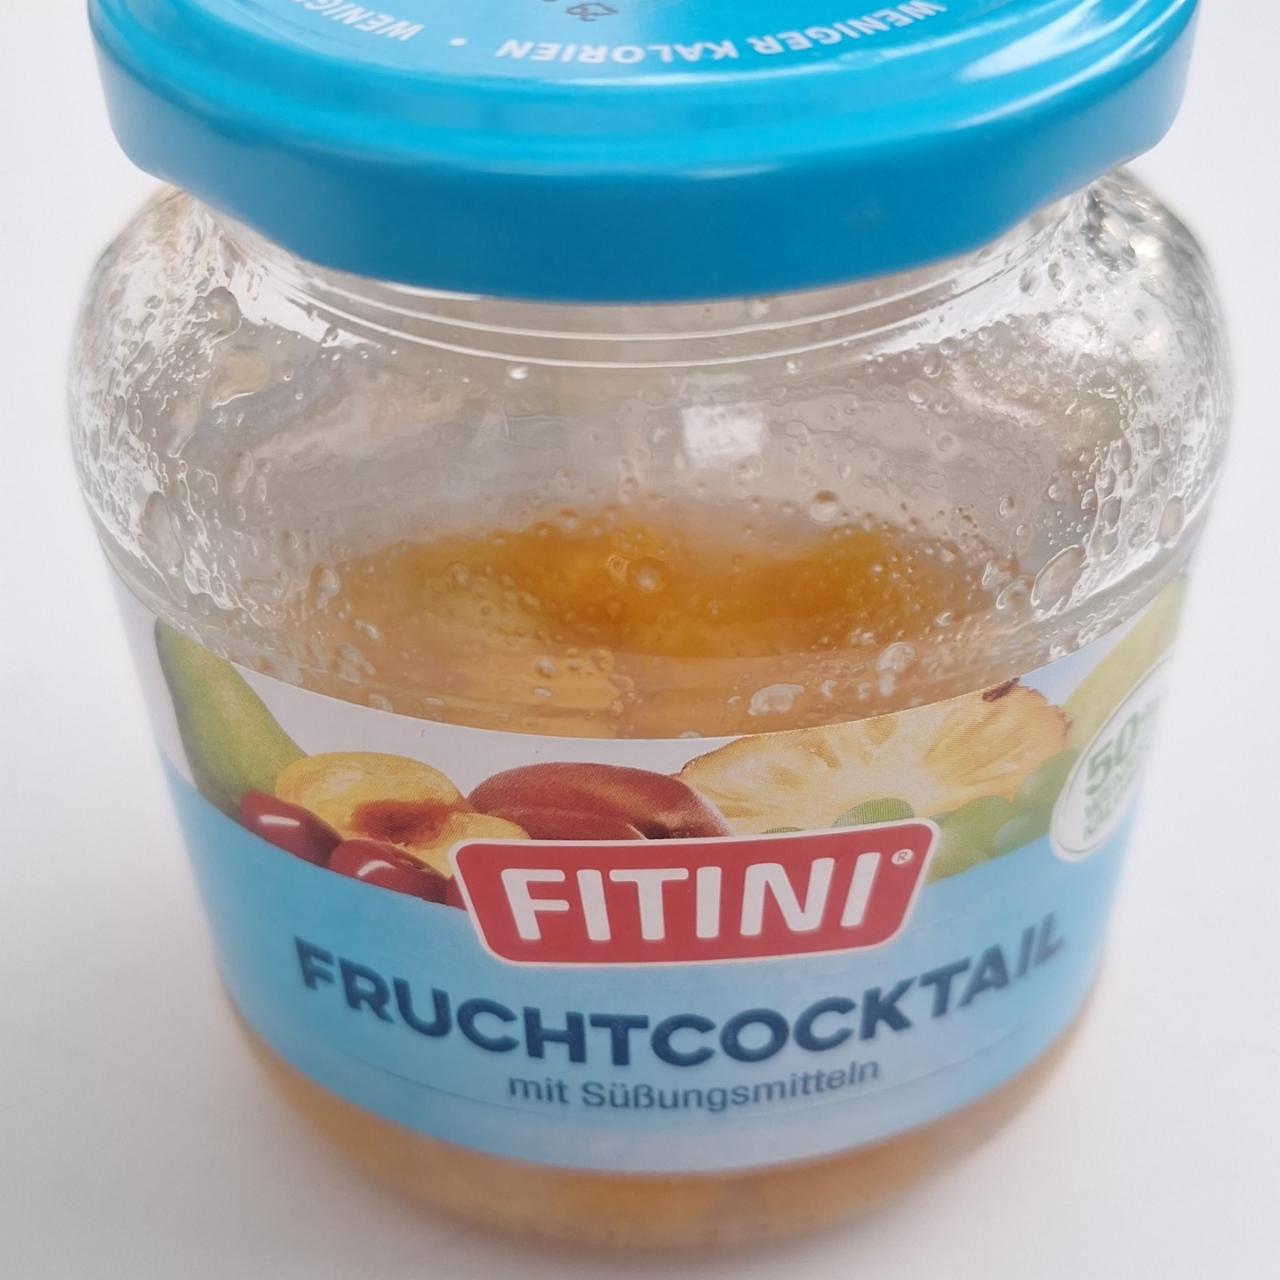 Fotografie - Fruchtcocktail mit süßungsmitteln Fitini